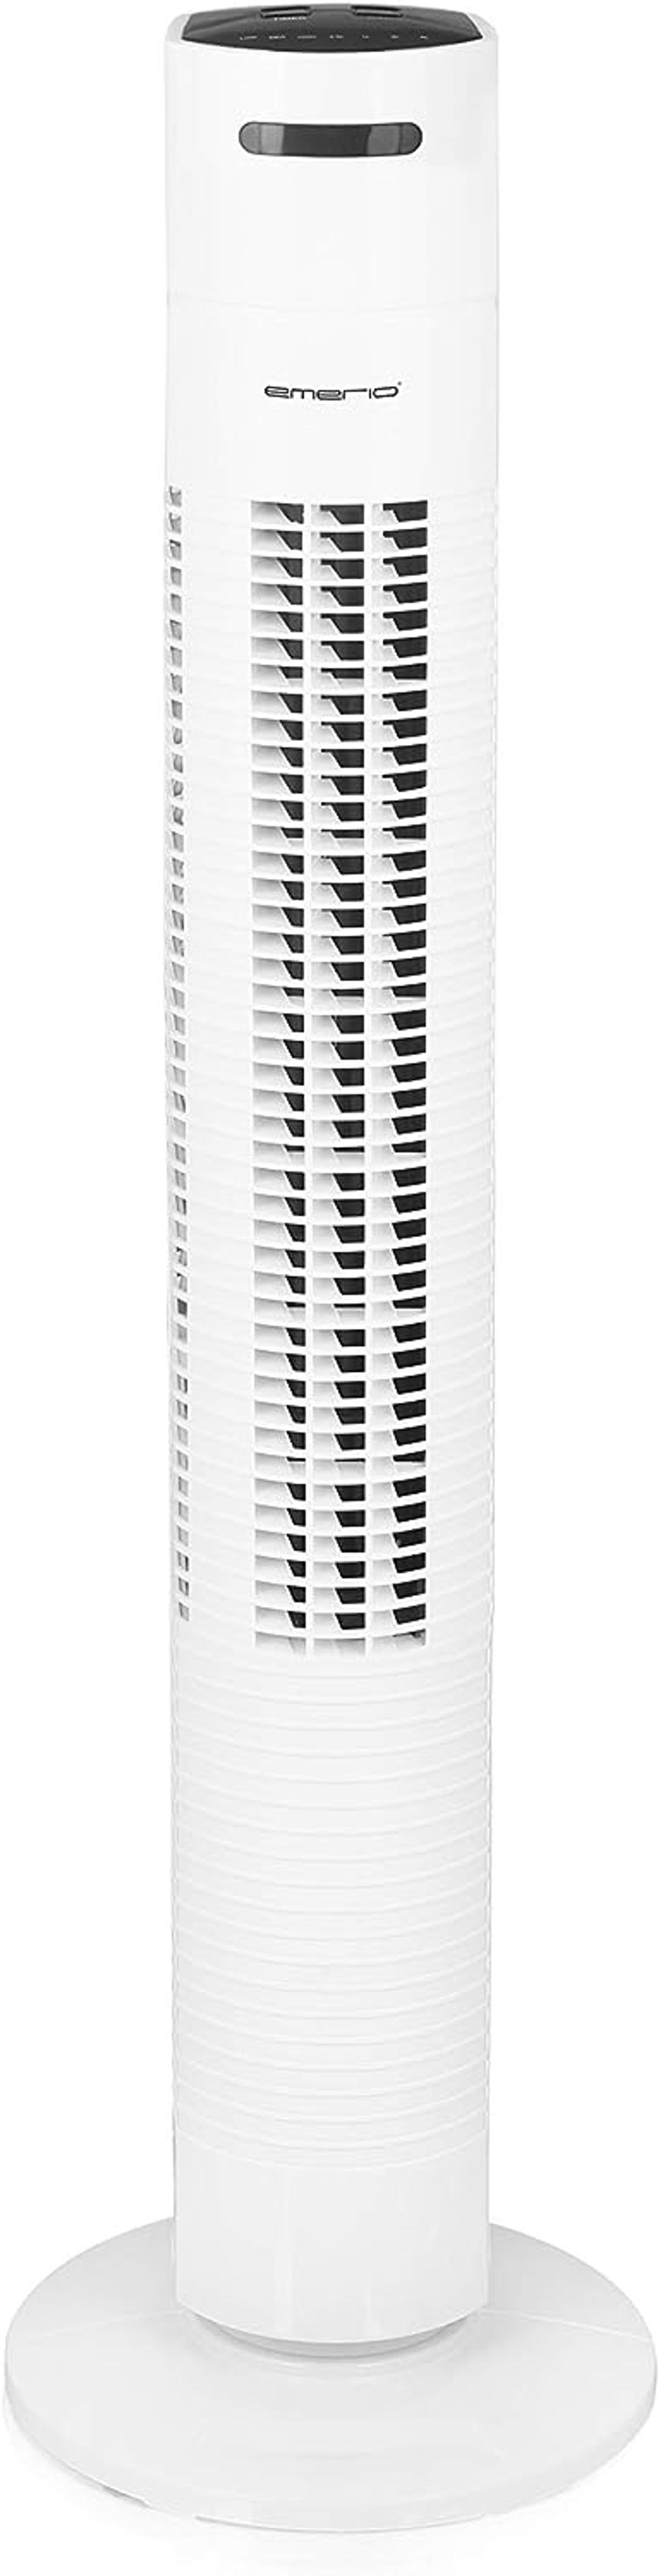 EMERIO TFN-123015 TOWER-VENTILATOR Turmventilator (35 Watt) Weiß